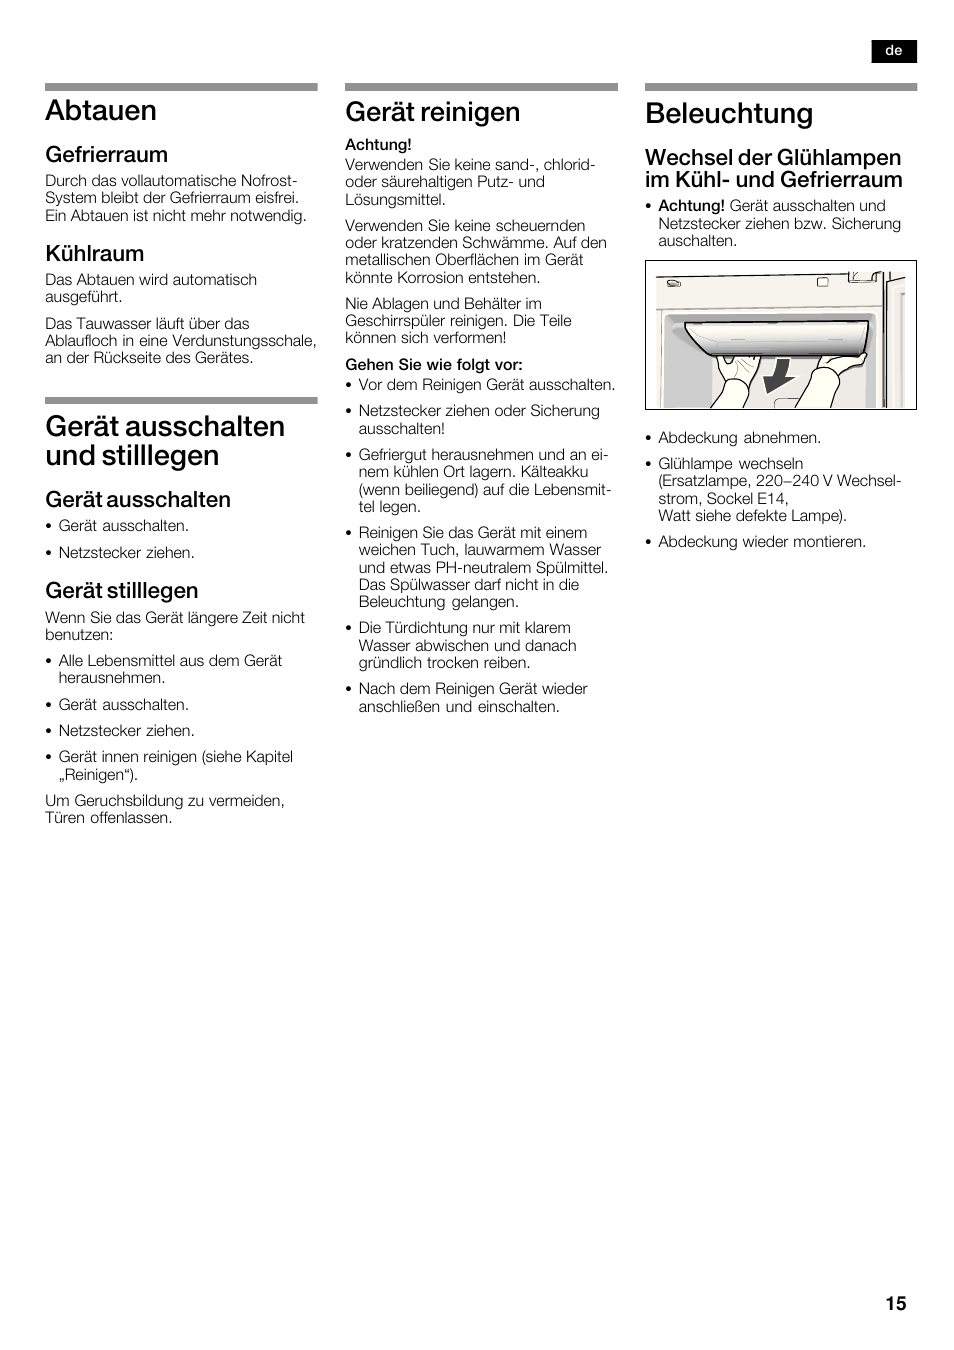 Abtauen, Gerät ausschalten und stilllegen, Beleuchtung | Siemens KA62NV40  User Manual | Page 15 / 94